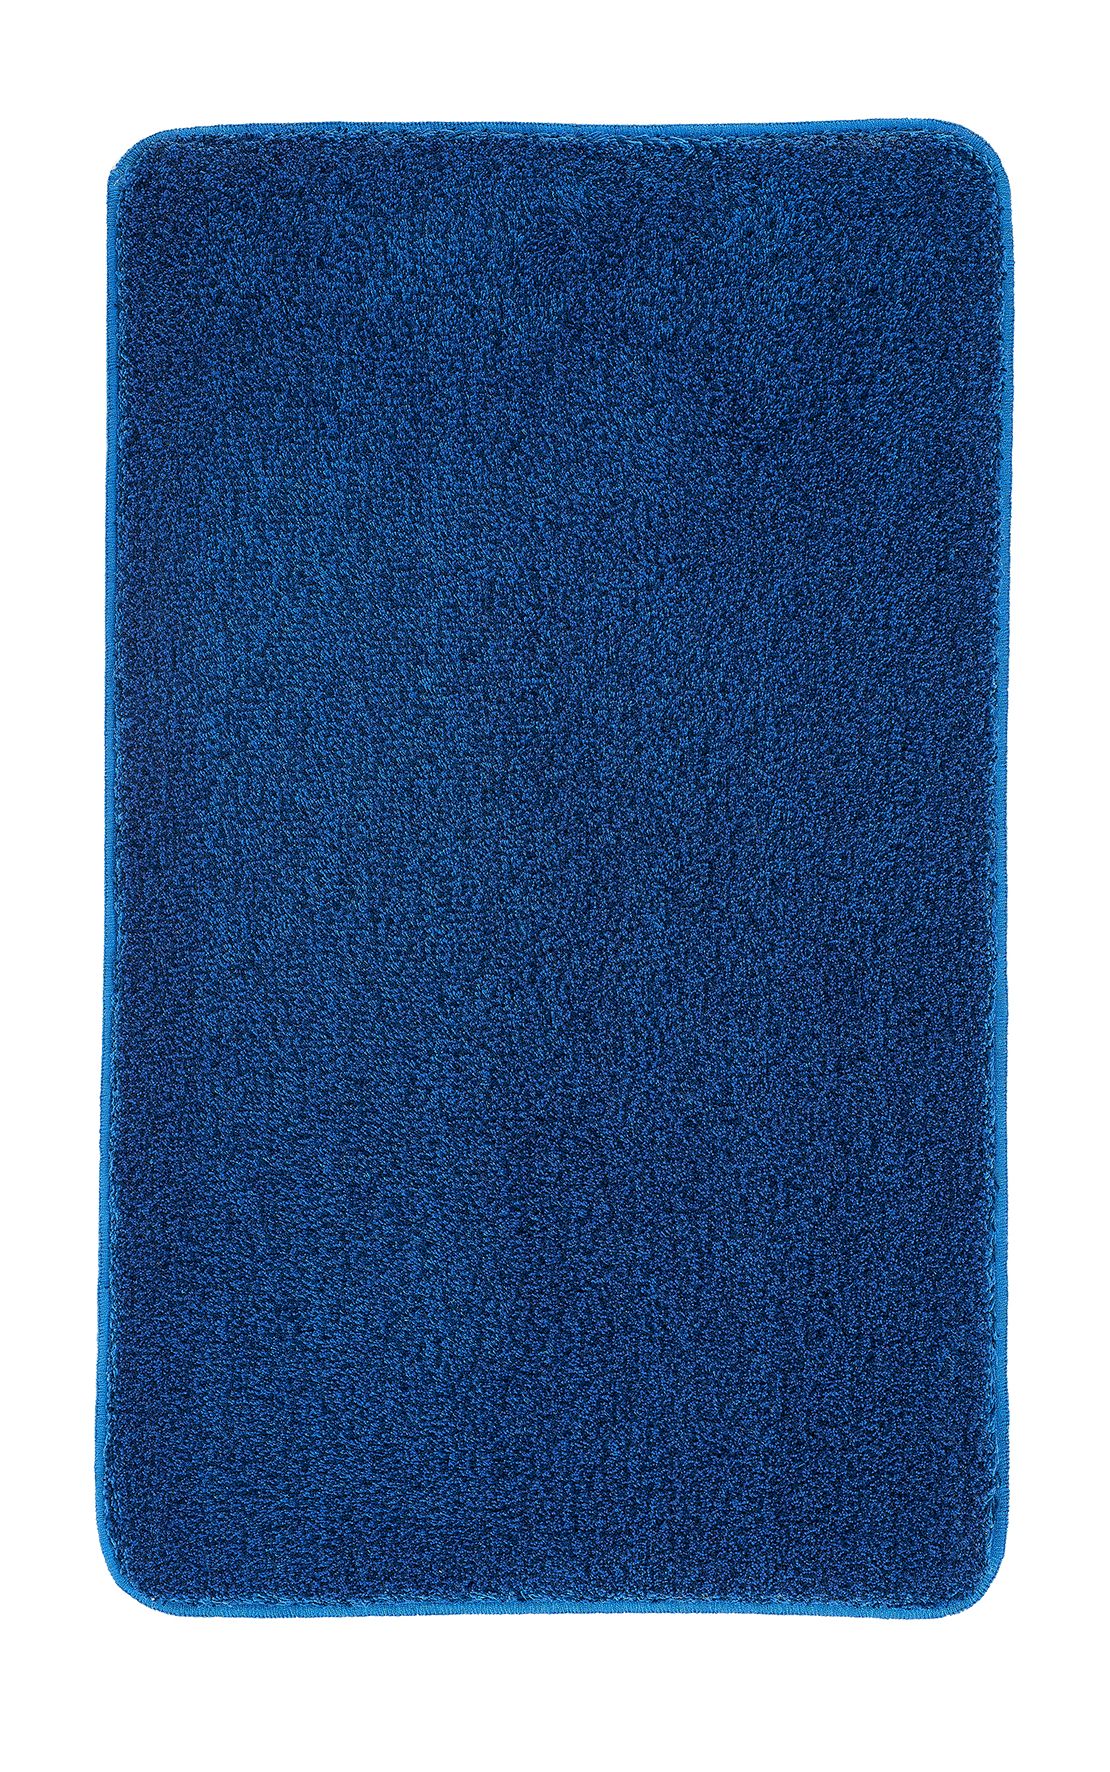 Badteppich, Relax Atlantikblau, 60x100  cm